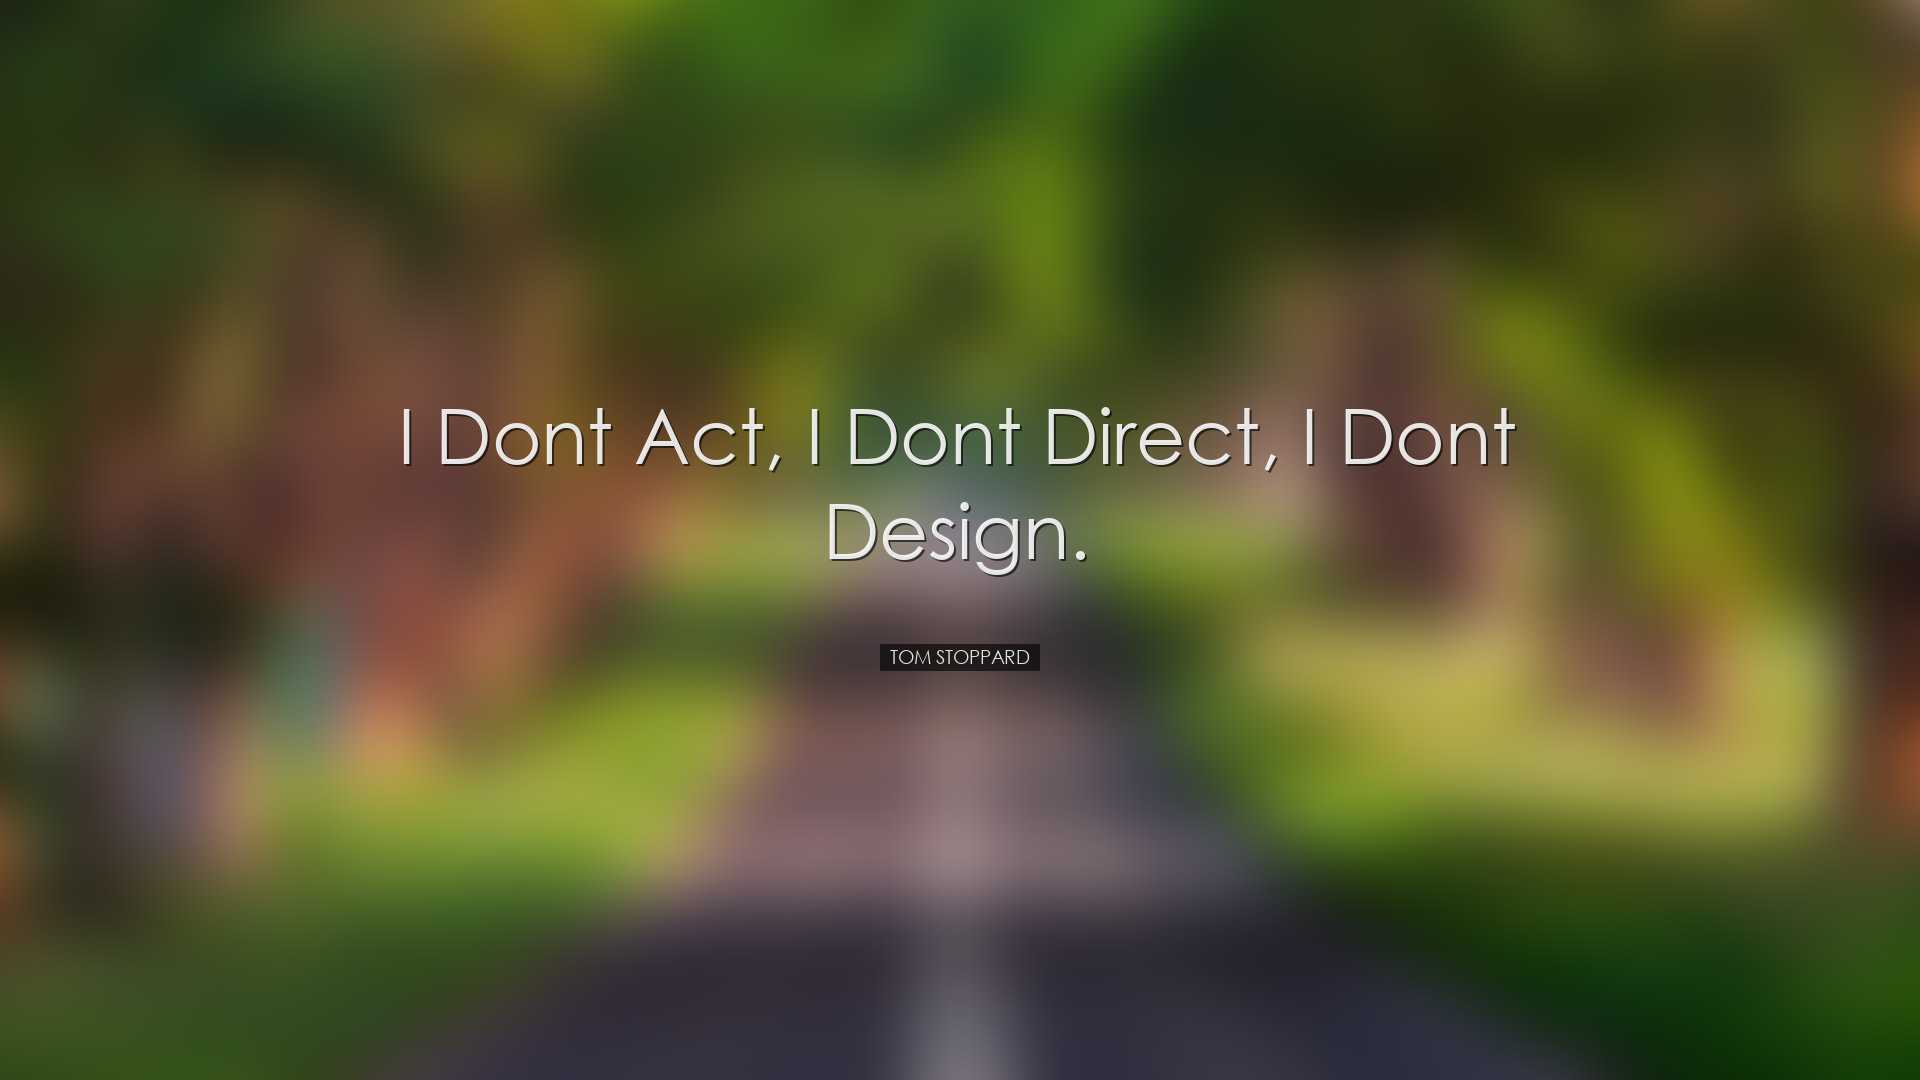 I dont act, I dont direct, I dont design. - Tom Stoppard